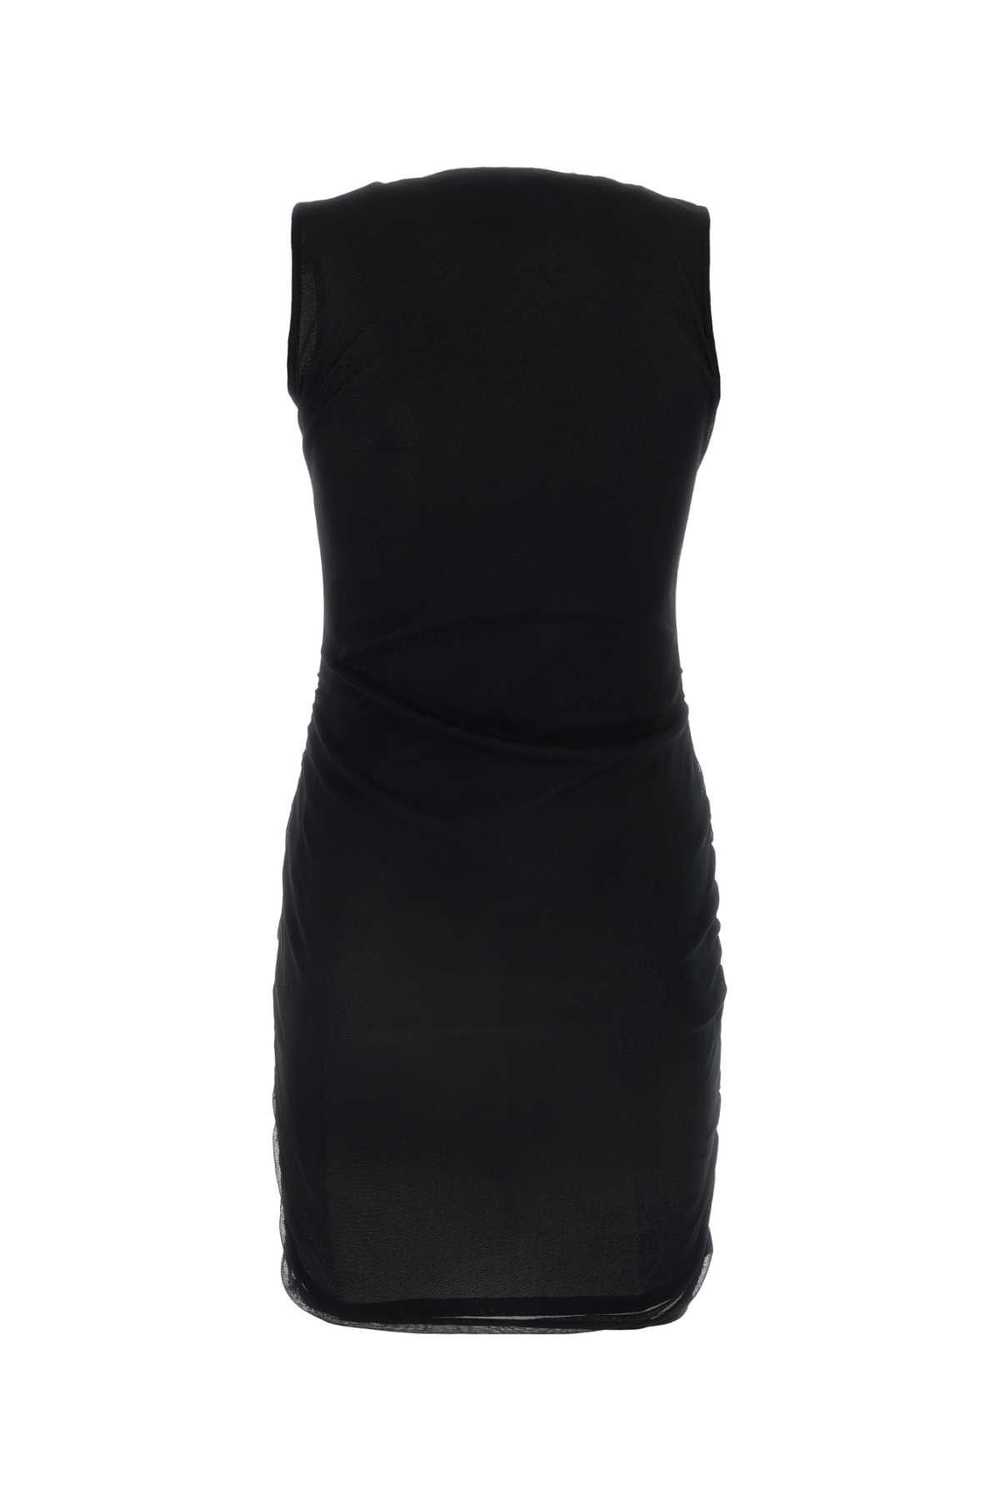 Saint Laurent Paris Black Nylon Mini Dress - image 2